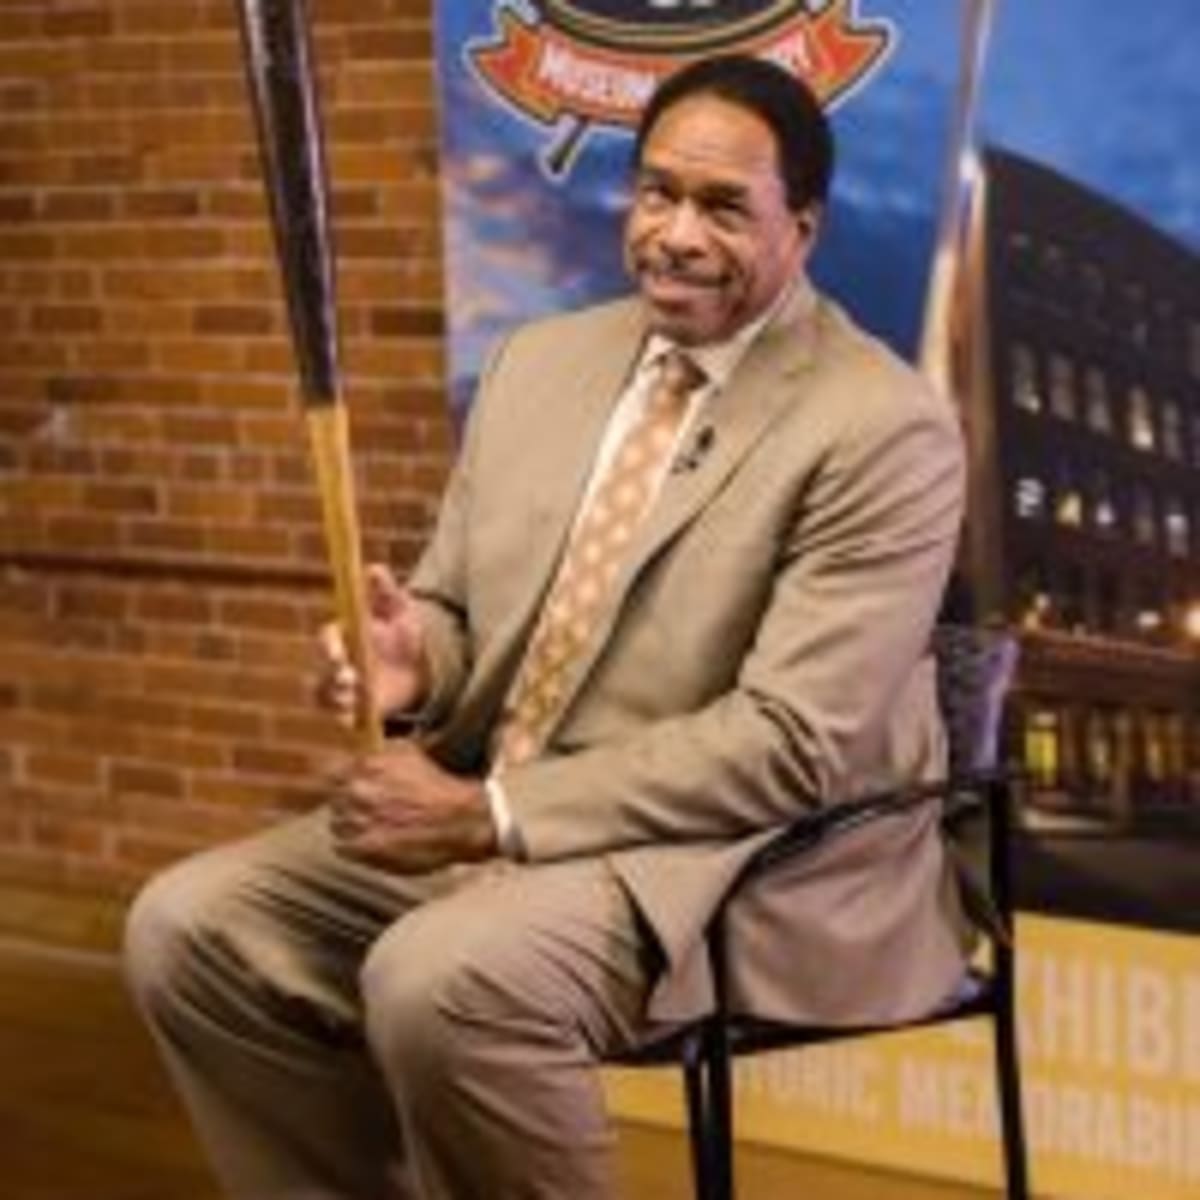 Dave Winfield receives Louisville Slugger's 2016 Living Legend